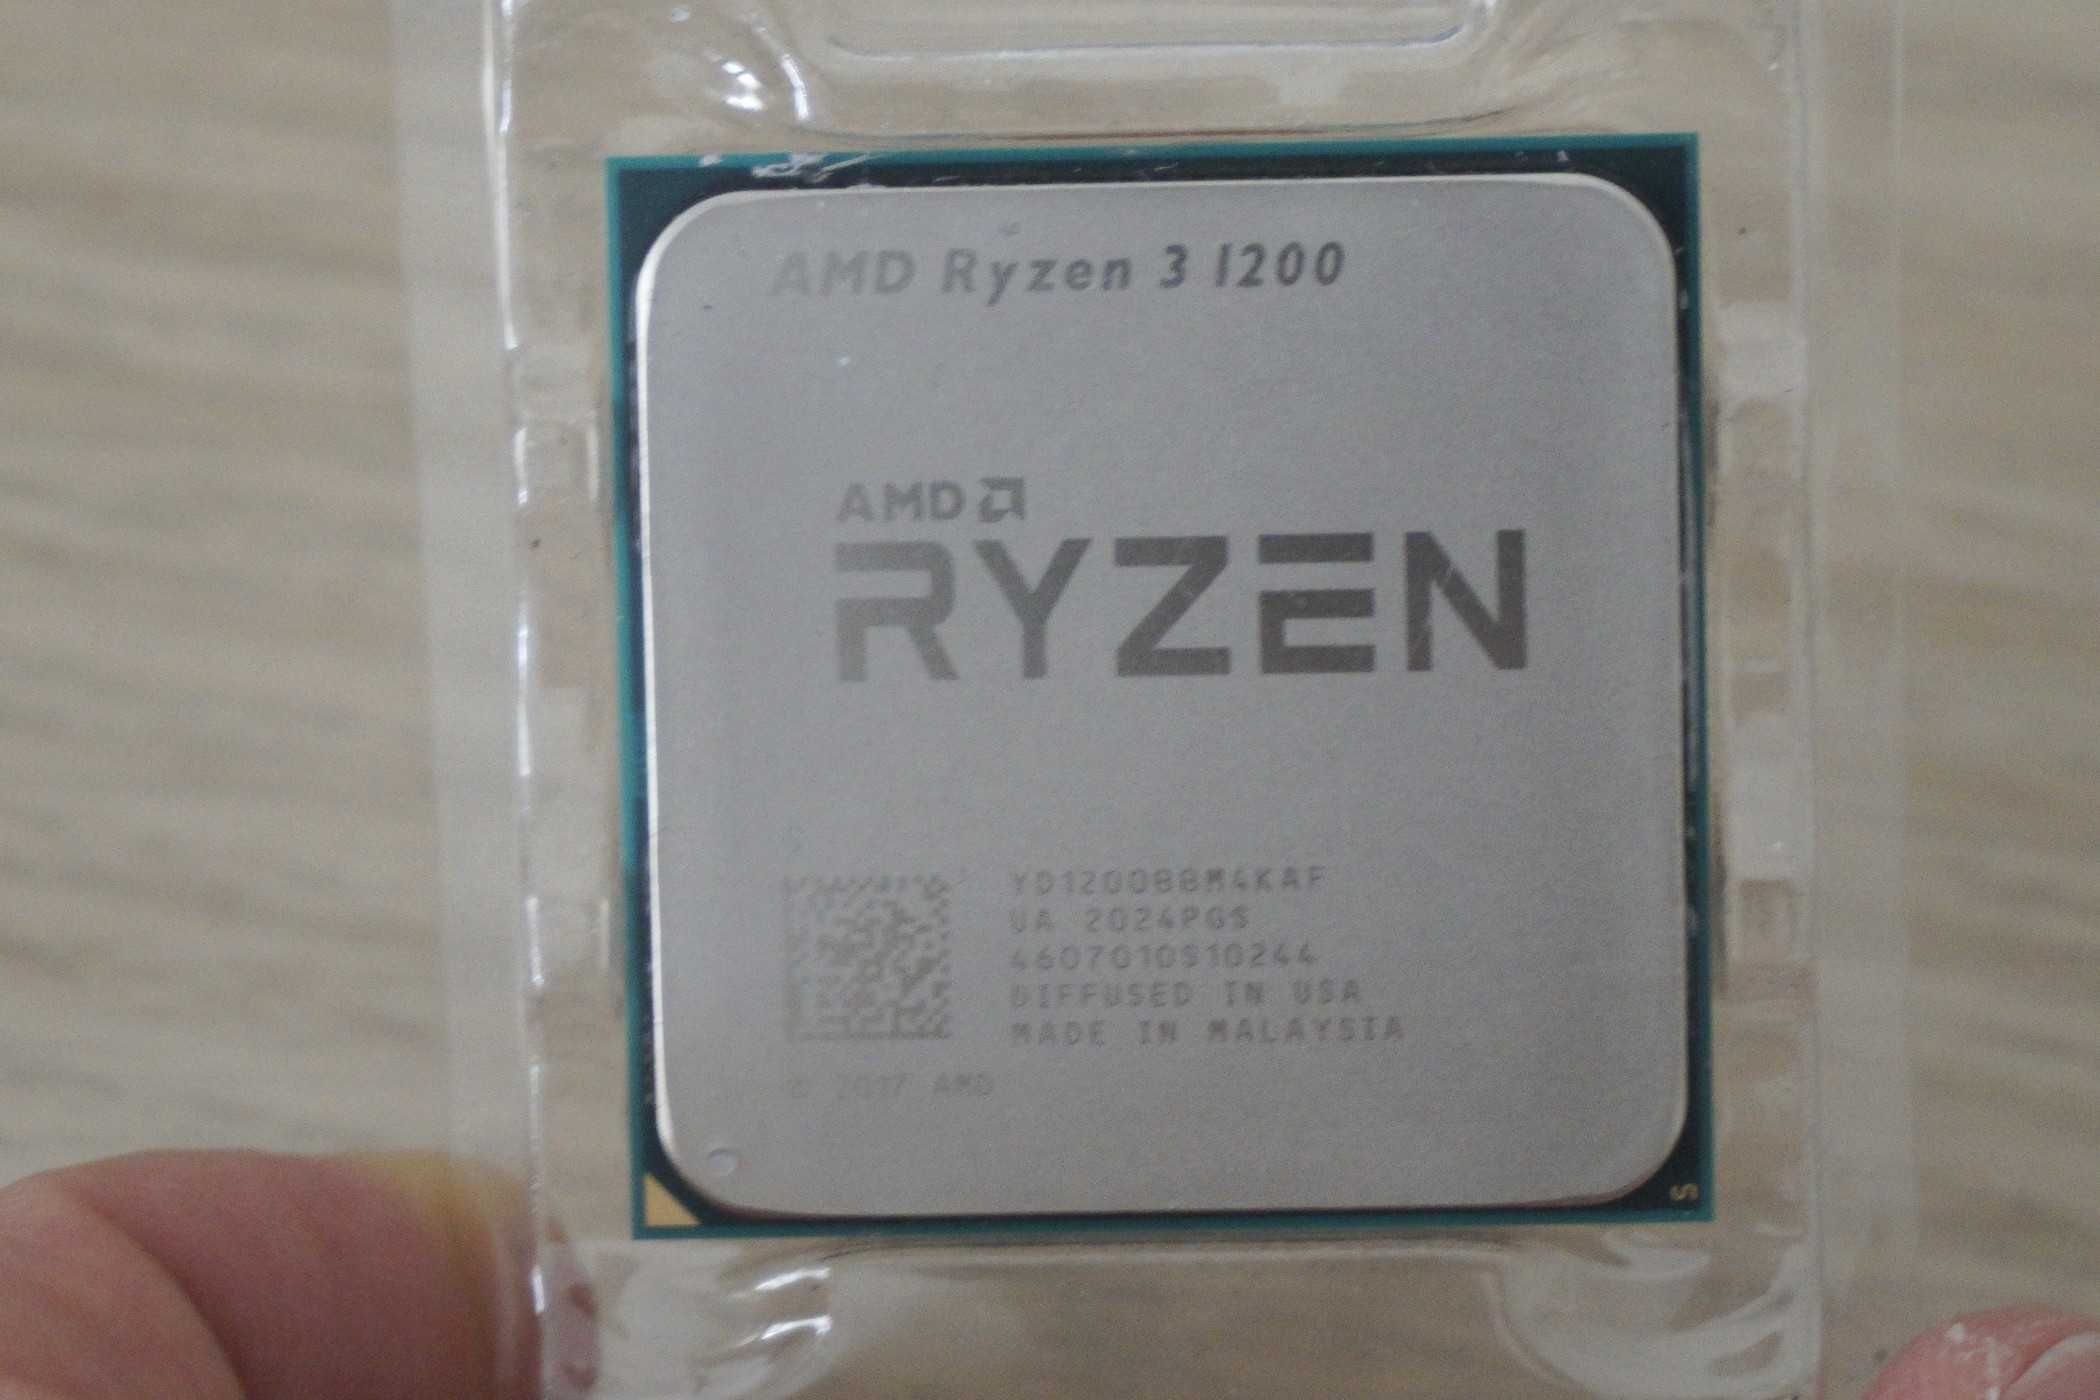 Процесор Ryzen 1200 - 4 core / 3.4Ghz boost / AM4 / 65W (вкл ДДС)